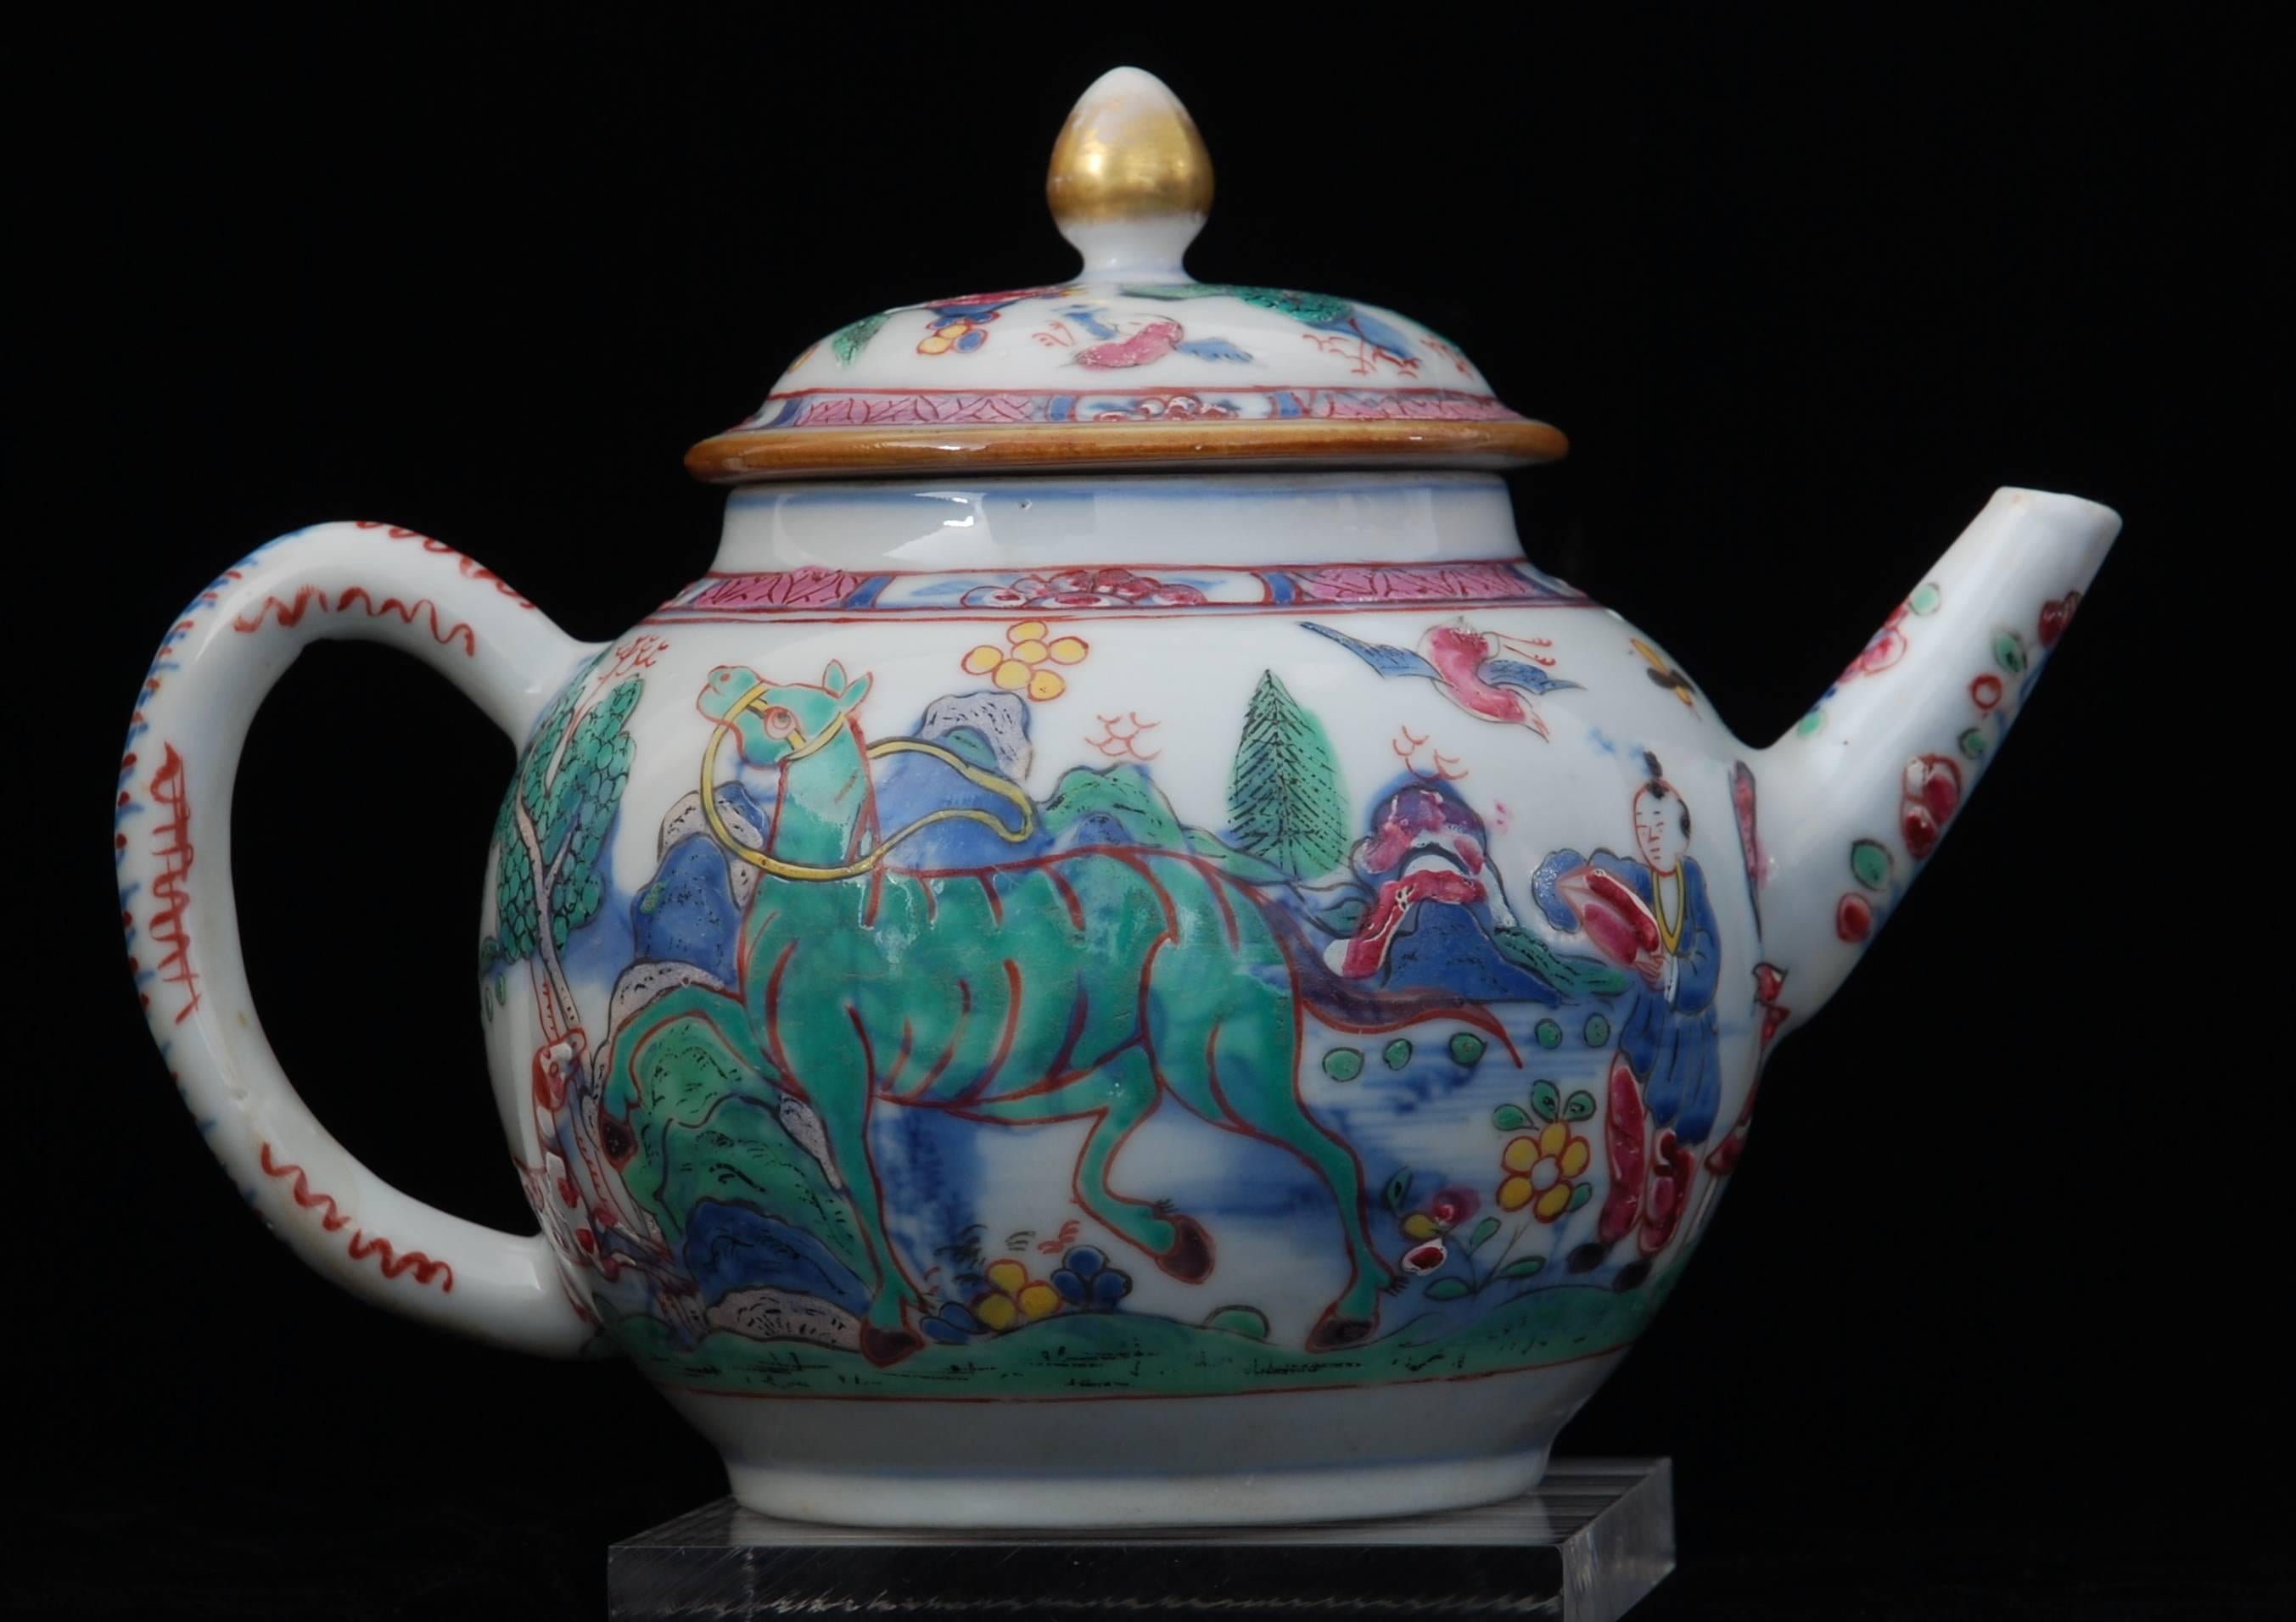 Porcelain Teapot, Prancing Ponies, China, circa 1760, Decorated in London